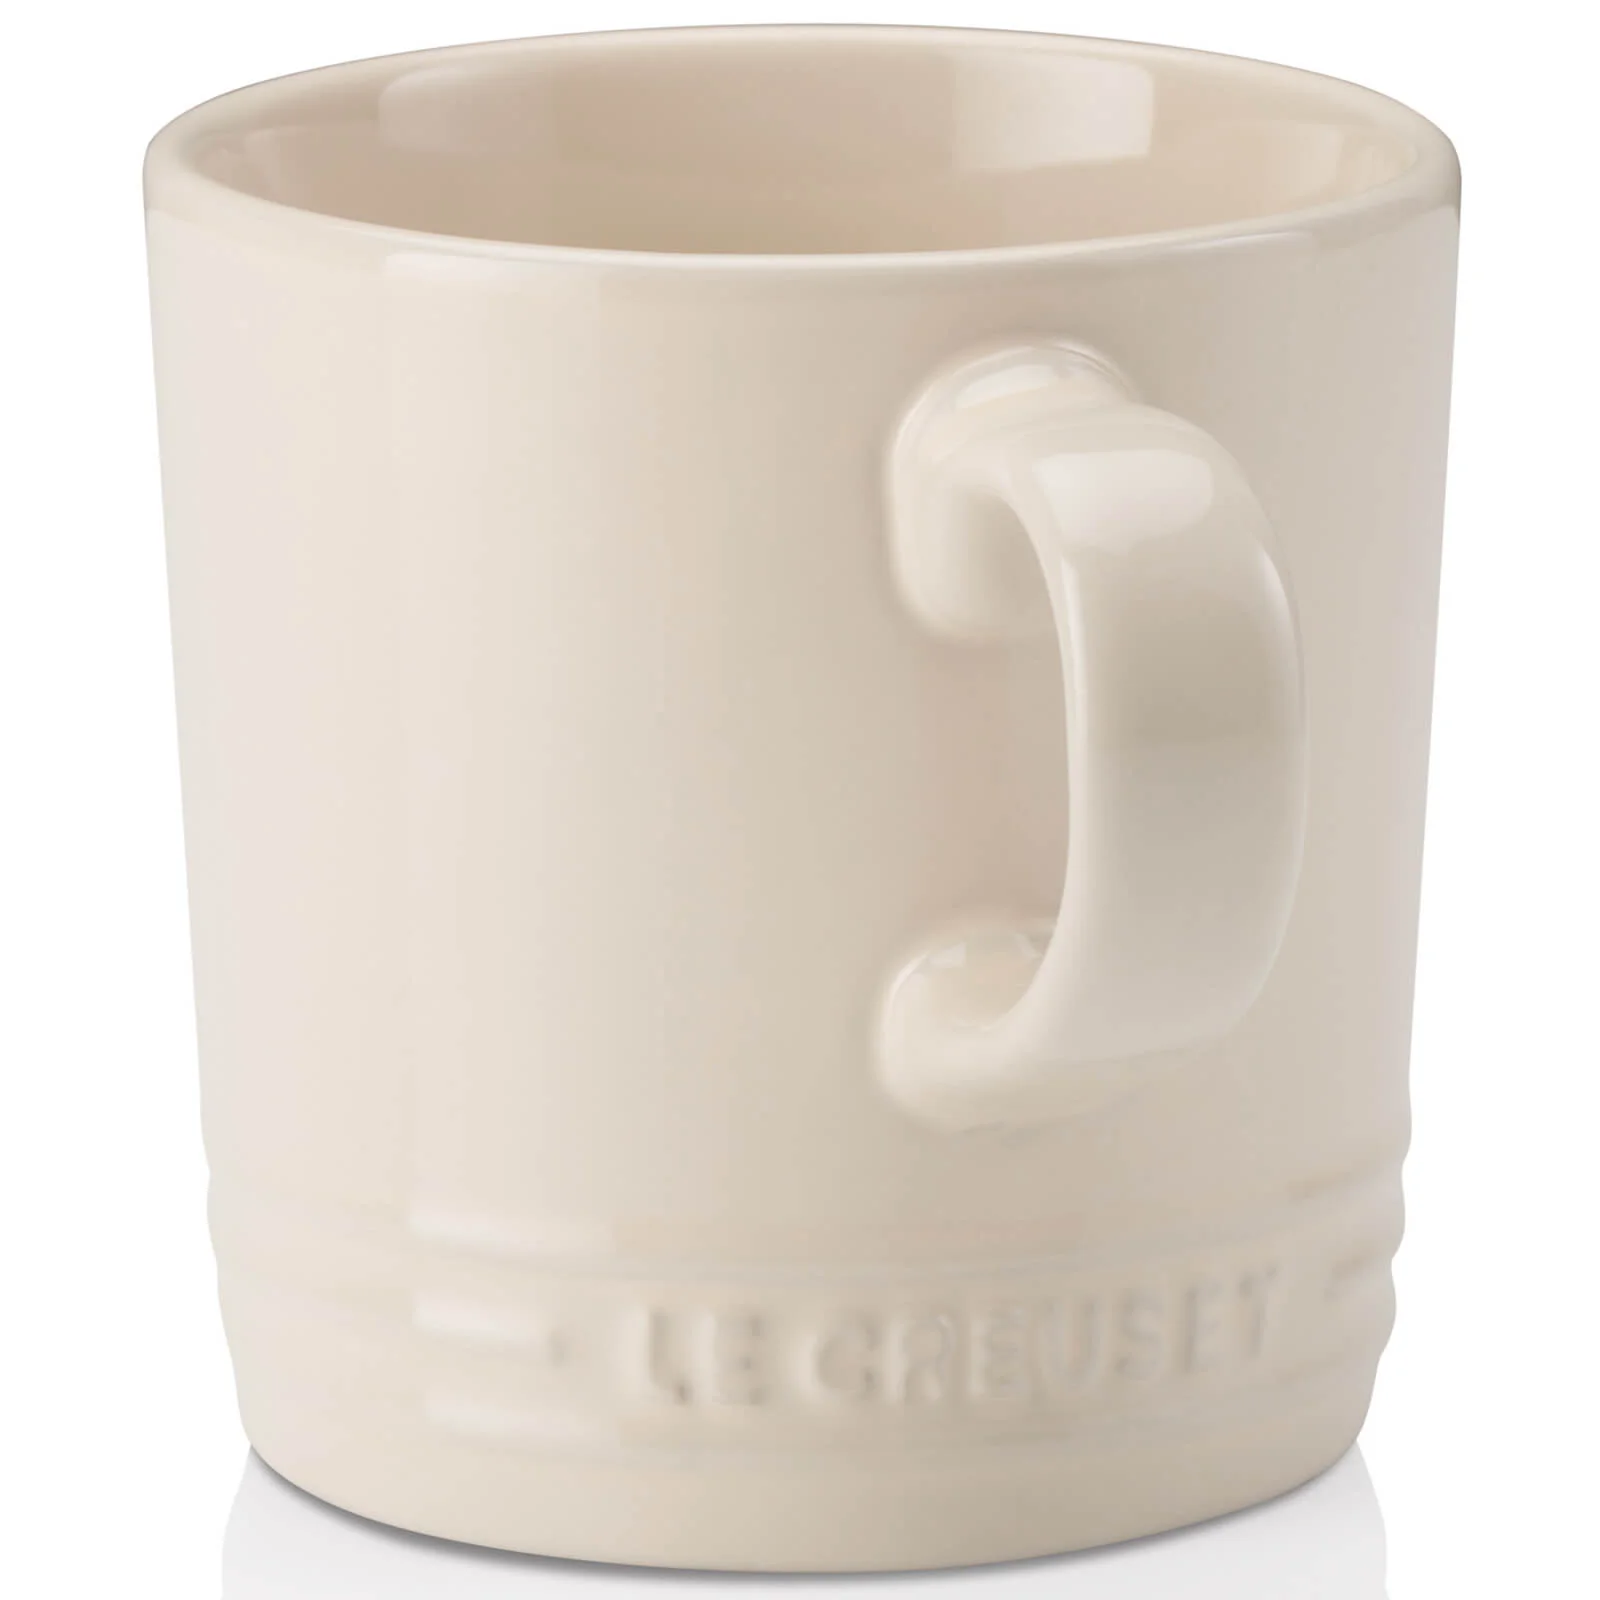 Le Creuset Stoneware Mug - 350ml - Almond Image 1